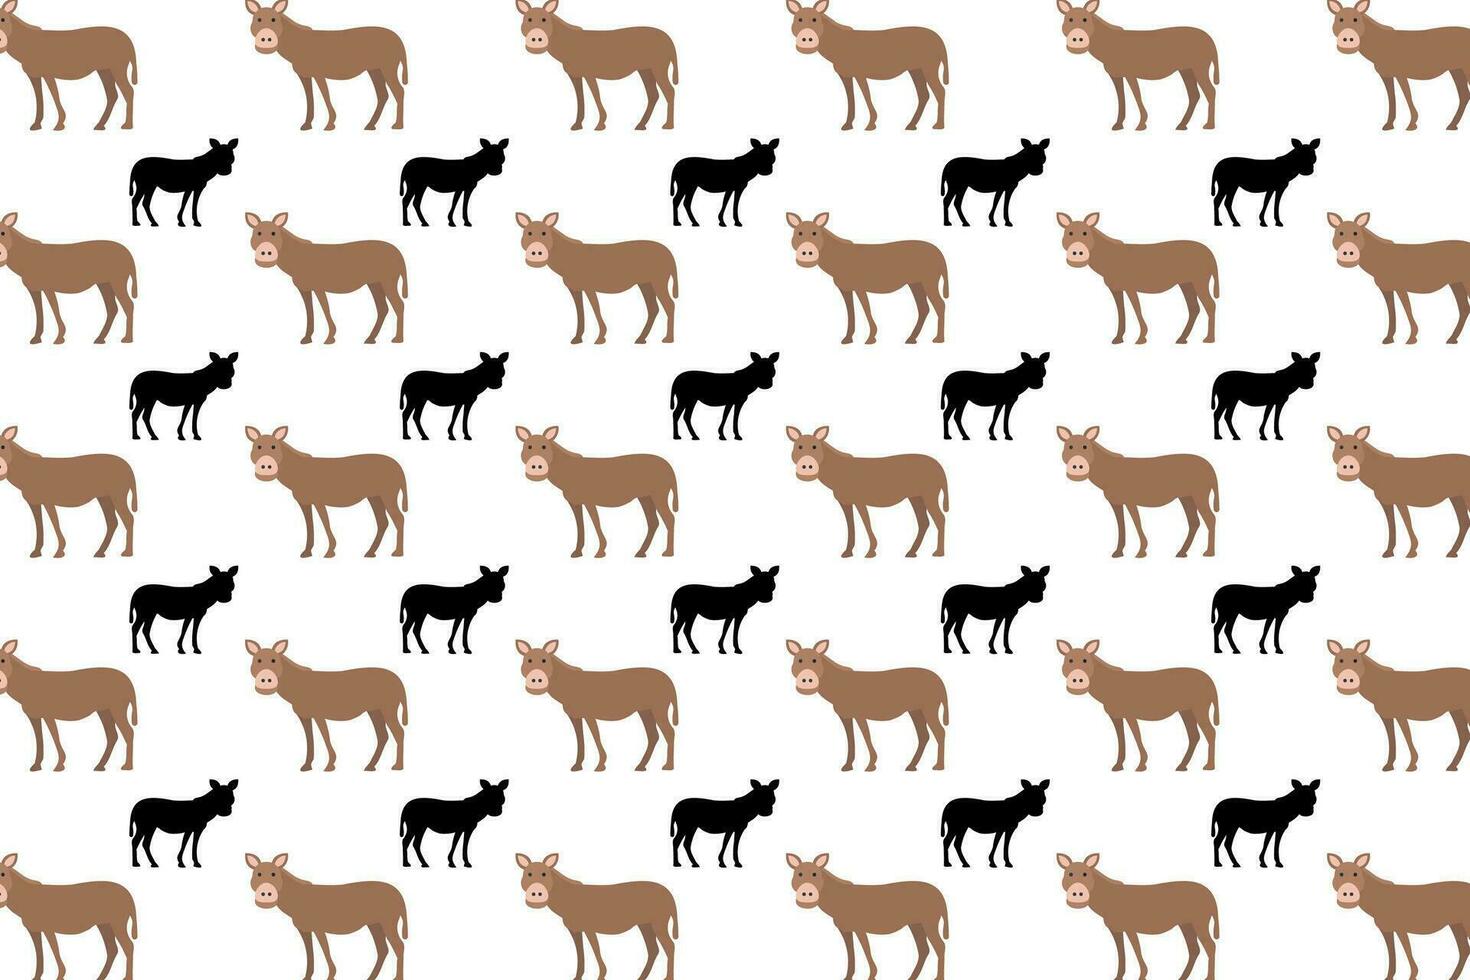 Flat Donkey Animal Pattern Background vector